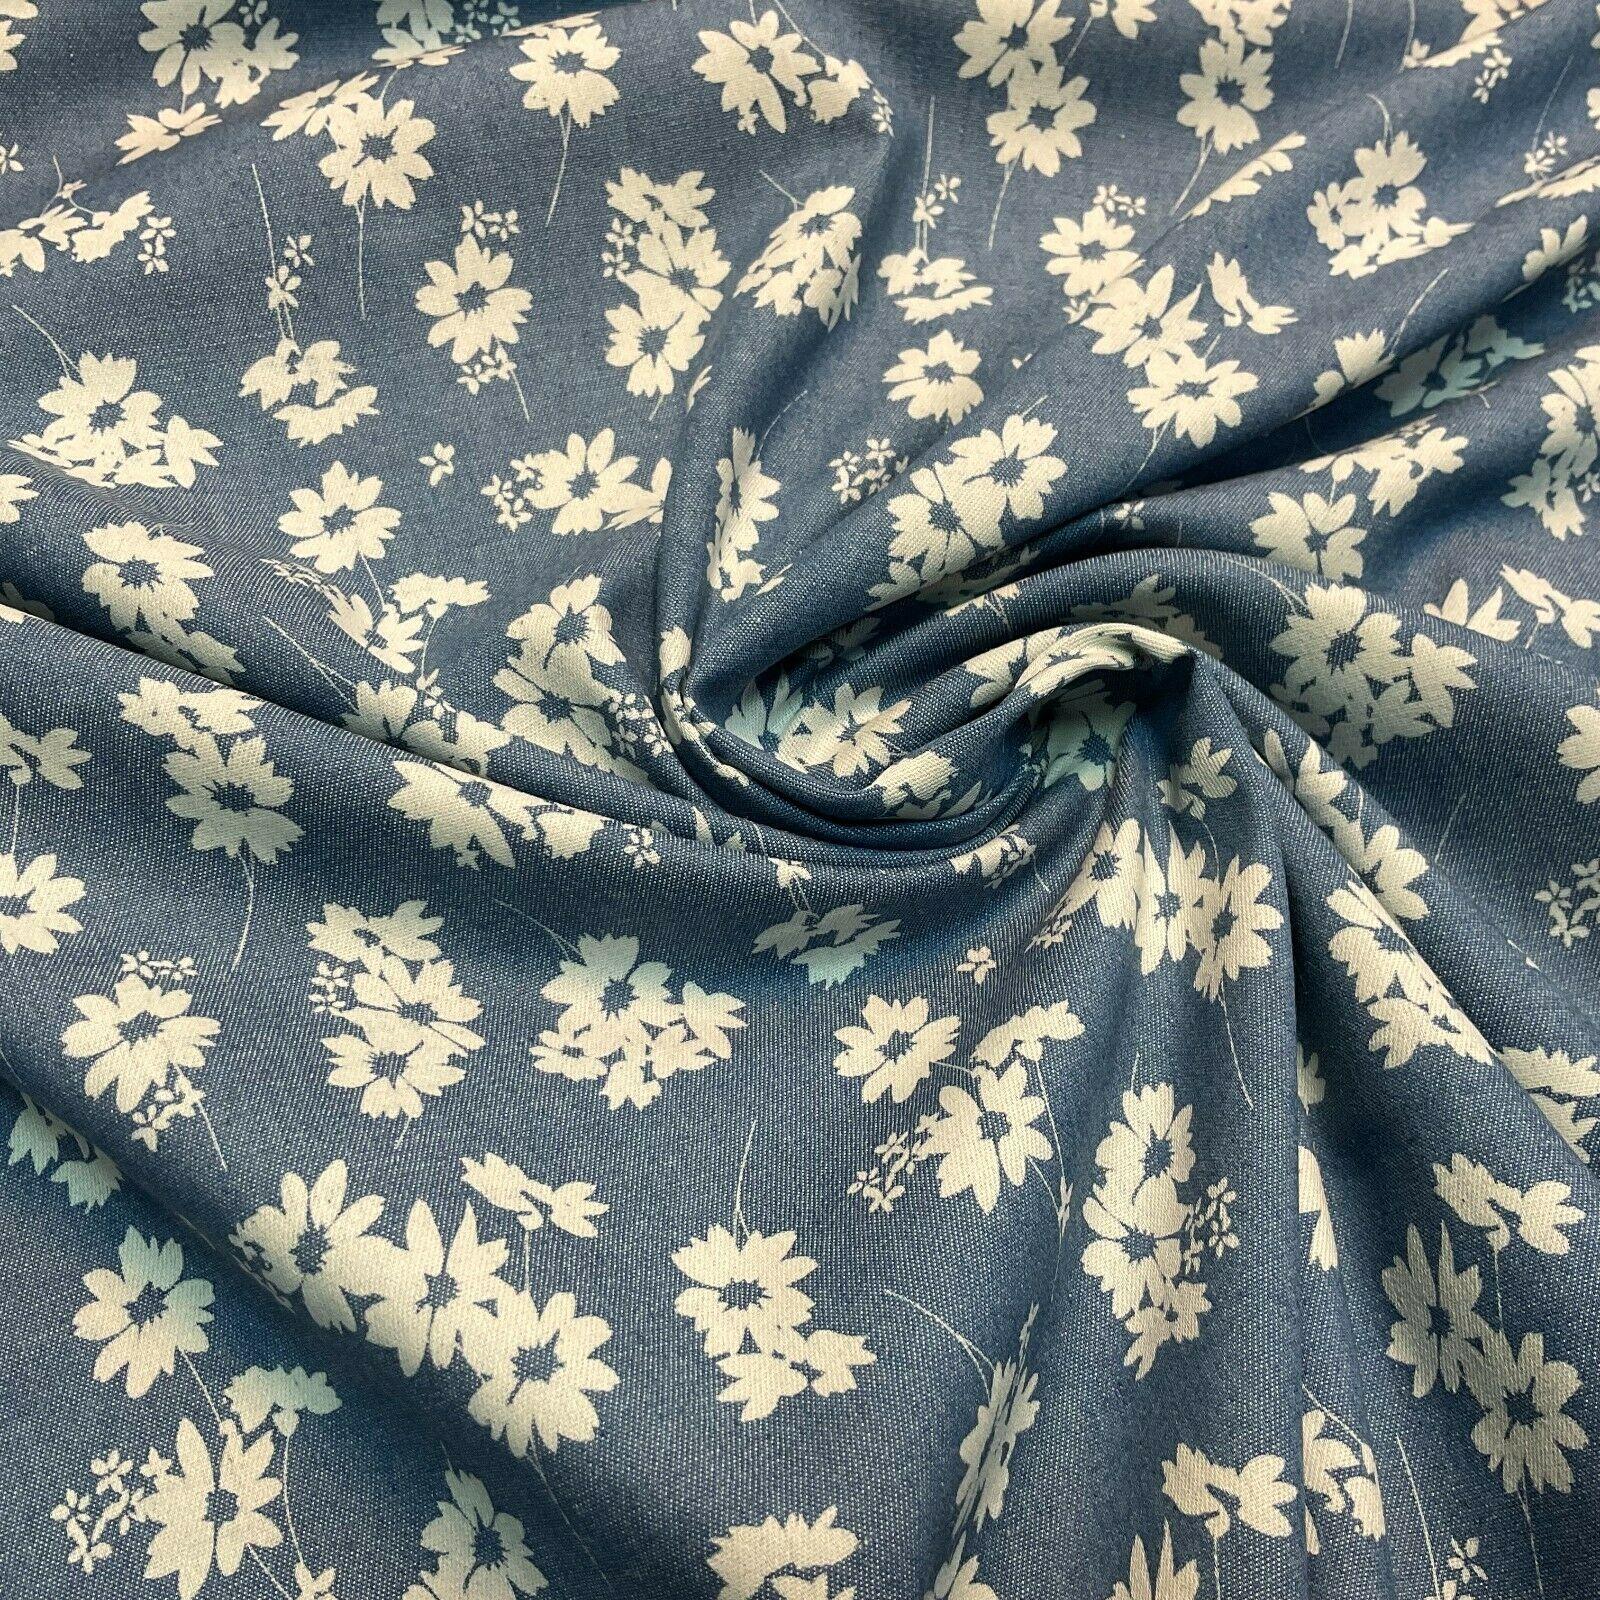 Printed 100% Cotton Chambray Denim Mixed Designs Dress Fabric 147cm M1604